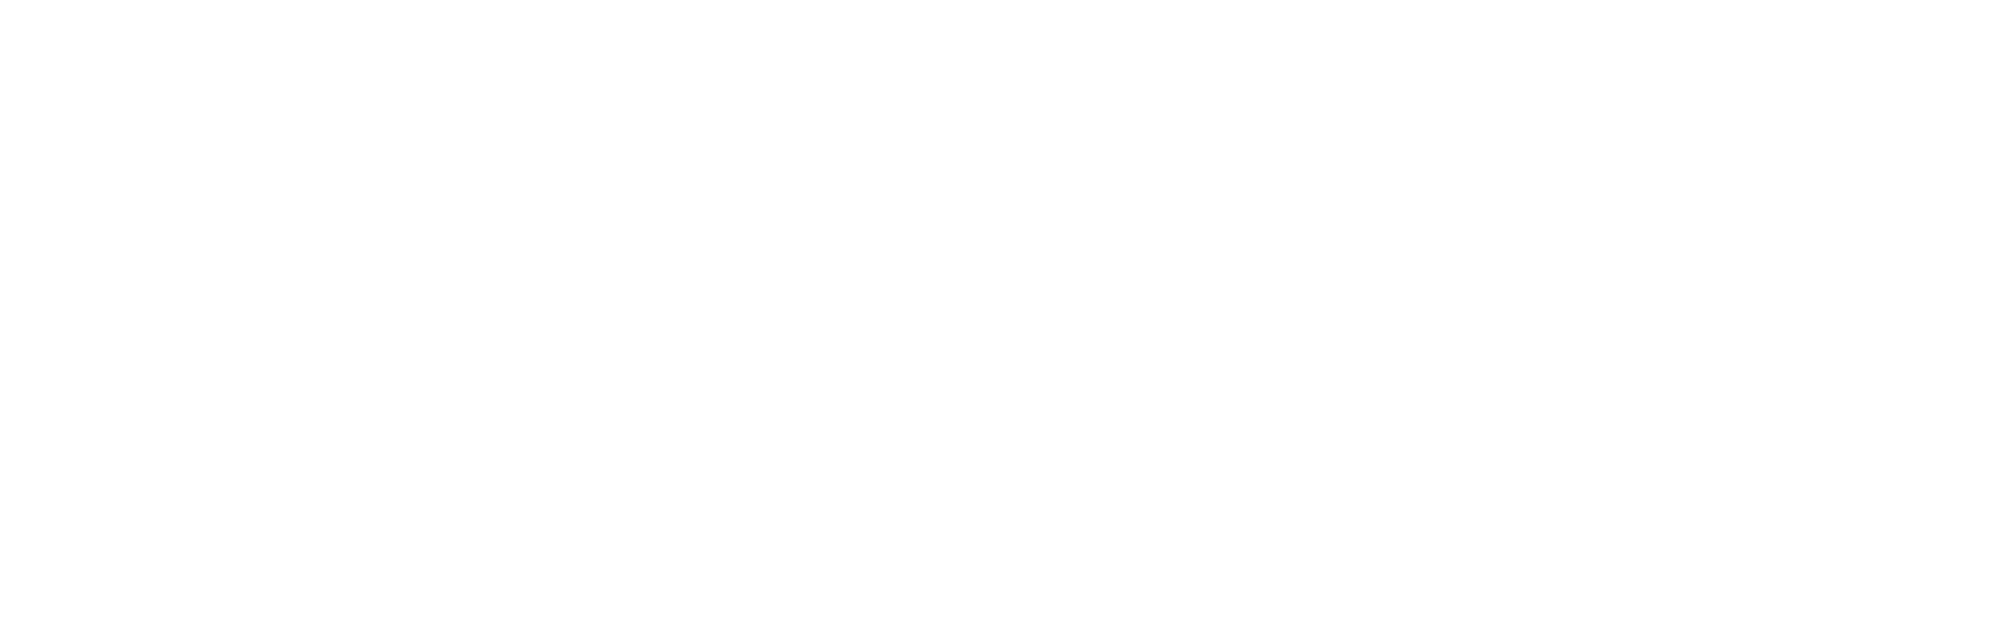 Bicycle Picnics Café & Bistro